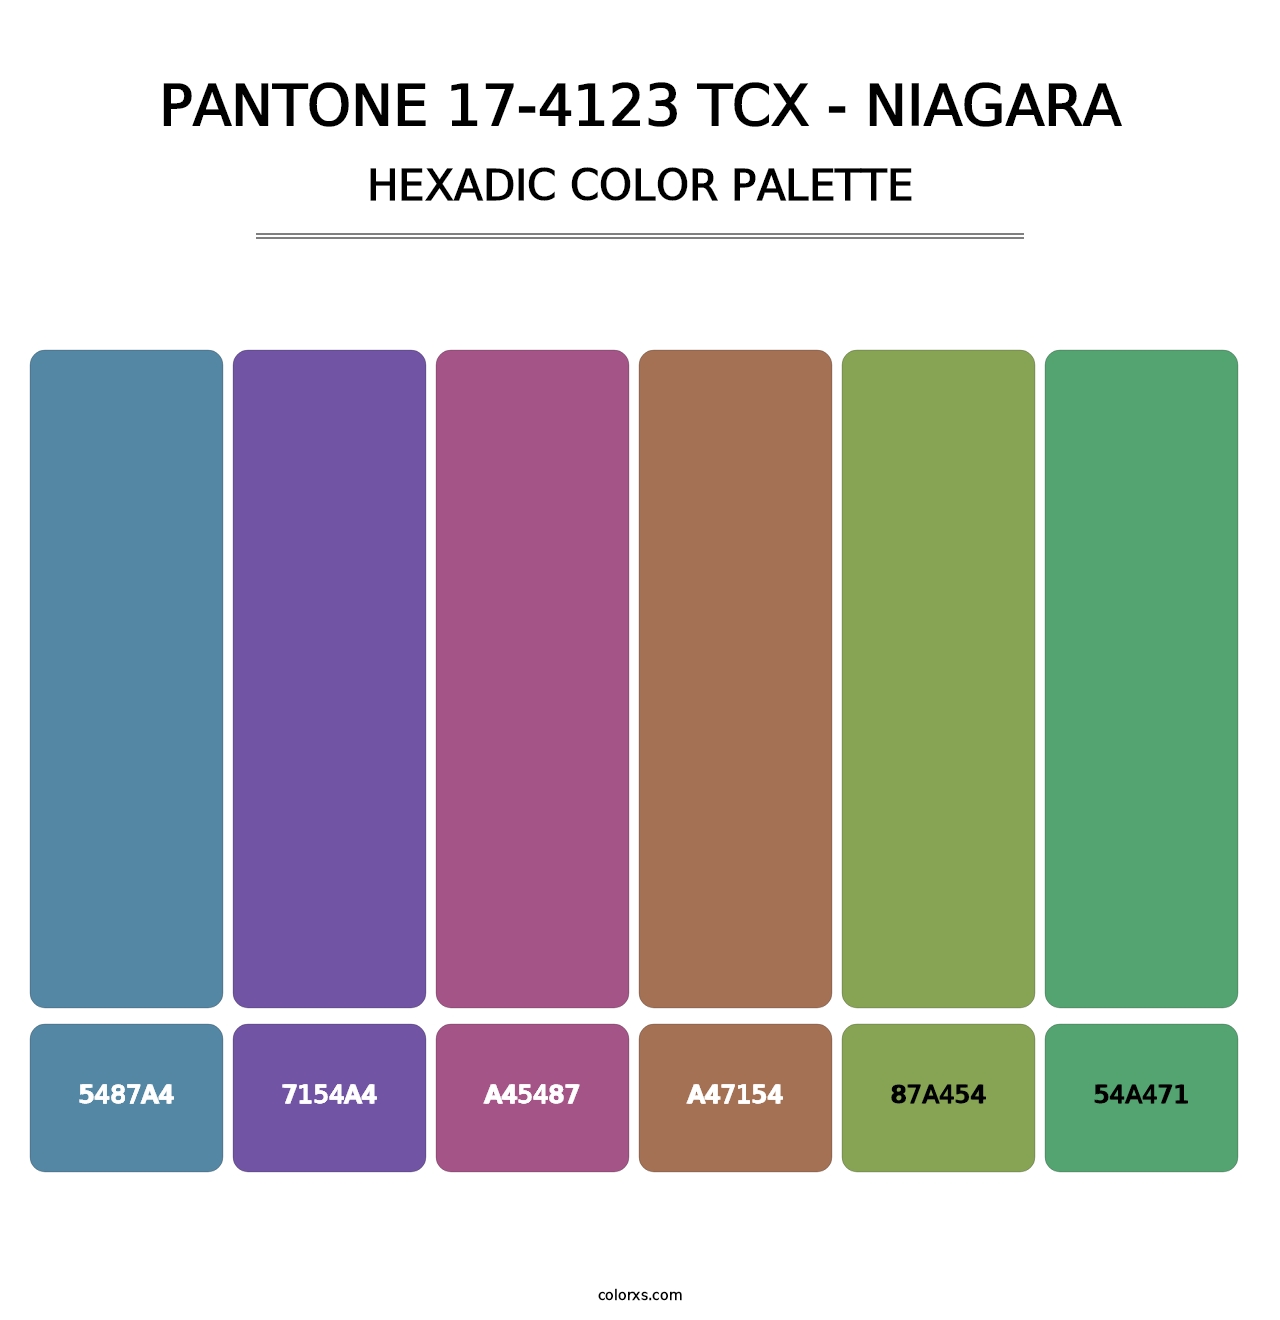 PANTONE 17-4123 TCX - Niagara - Hexadic Color Palette